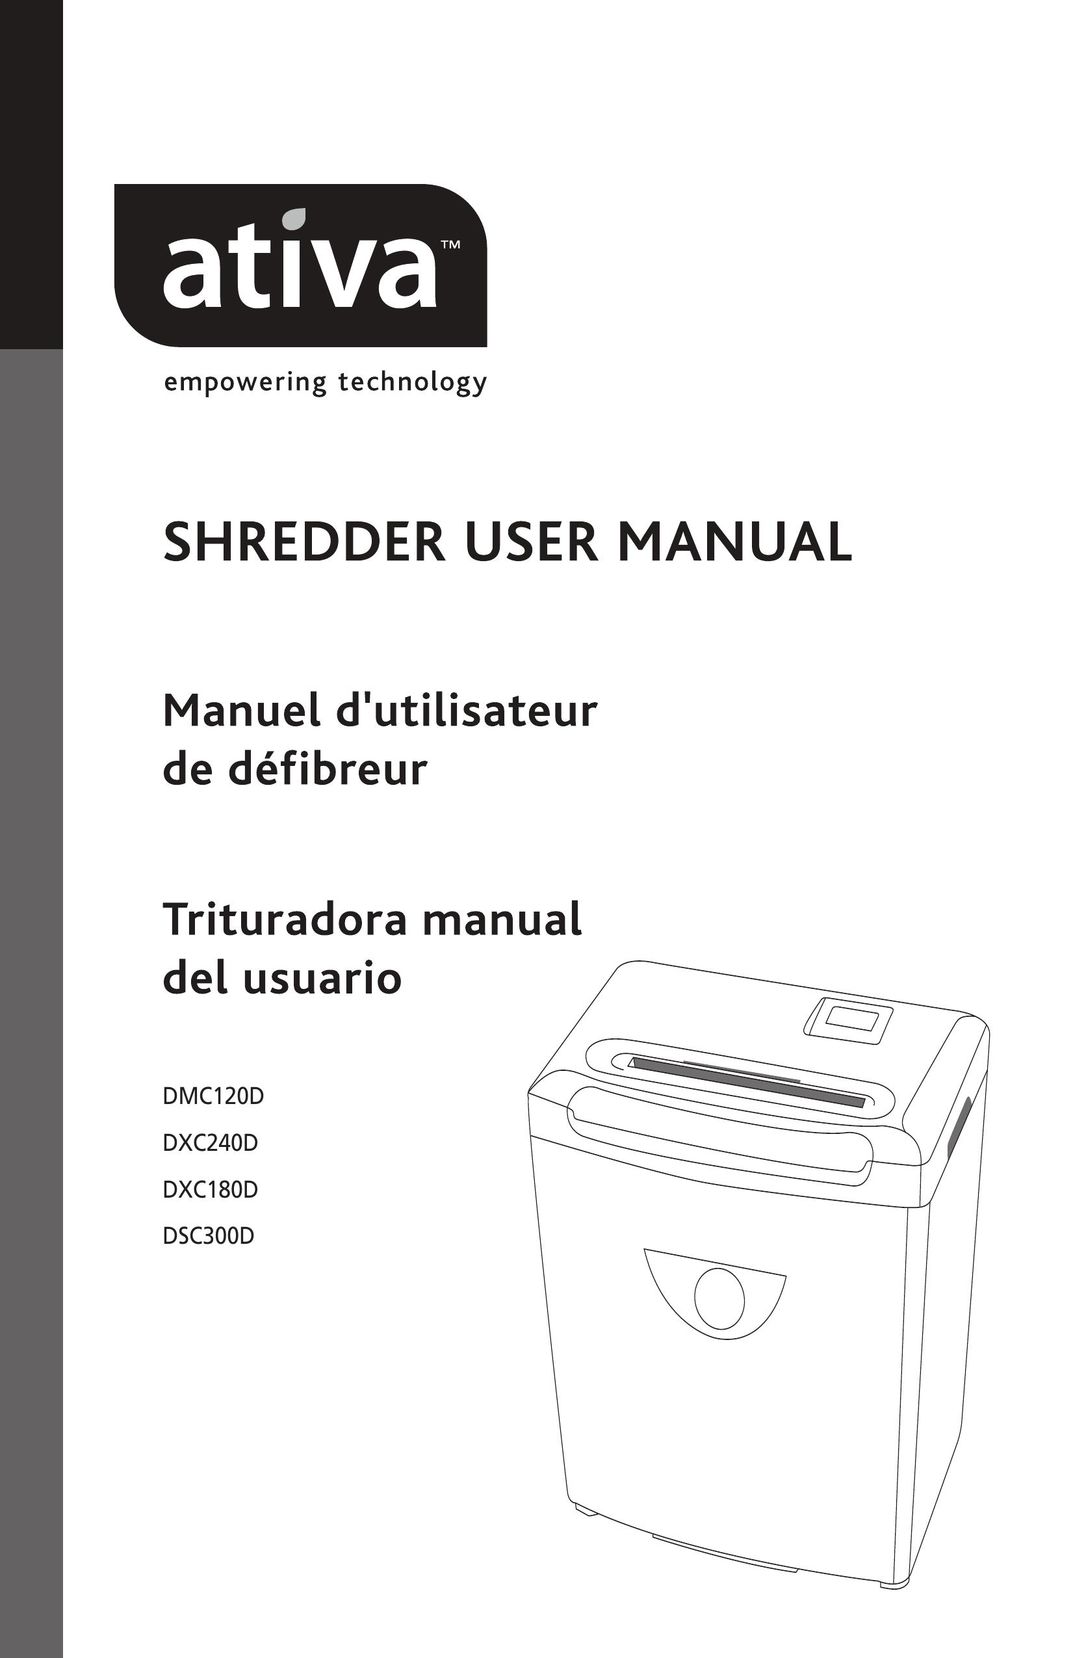 Ativa DXC240D Paper Shredder User Manual